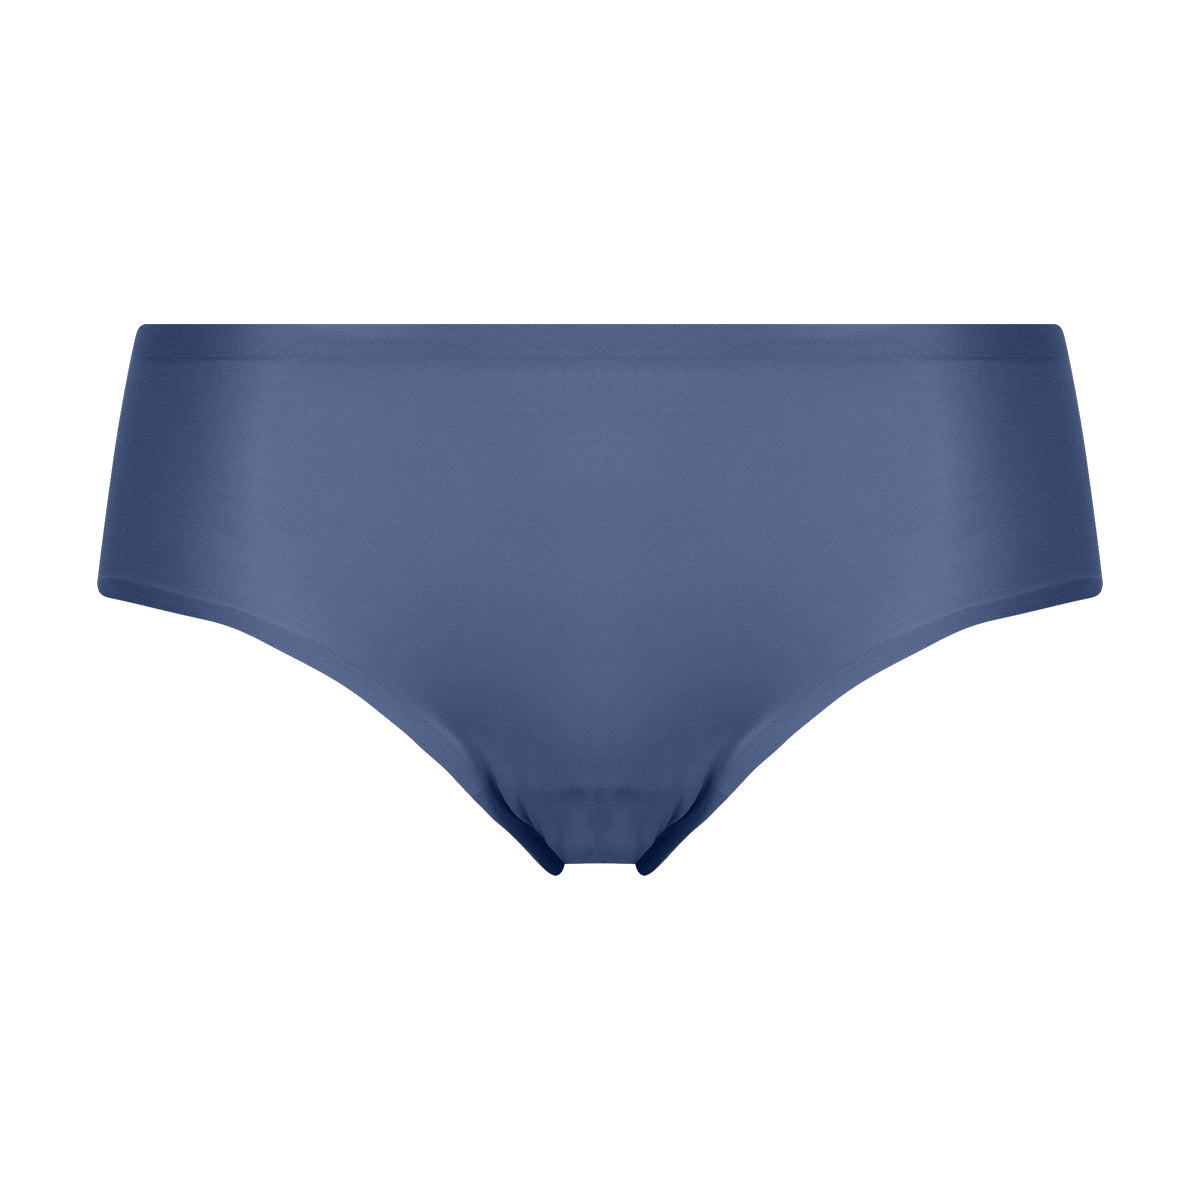 Moda-Underwear:Chantelle SoftStretch Seamless Bikini Brief in One Size -  C26430